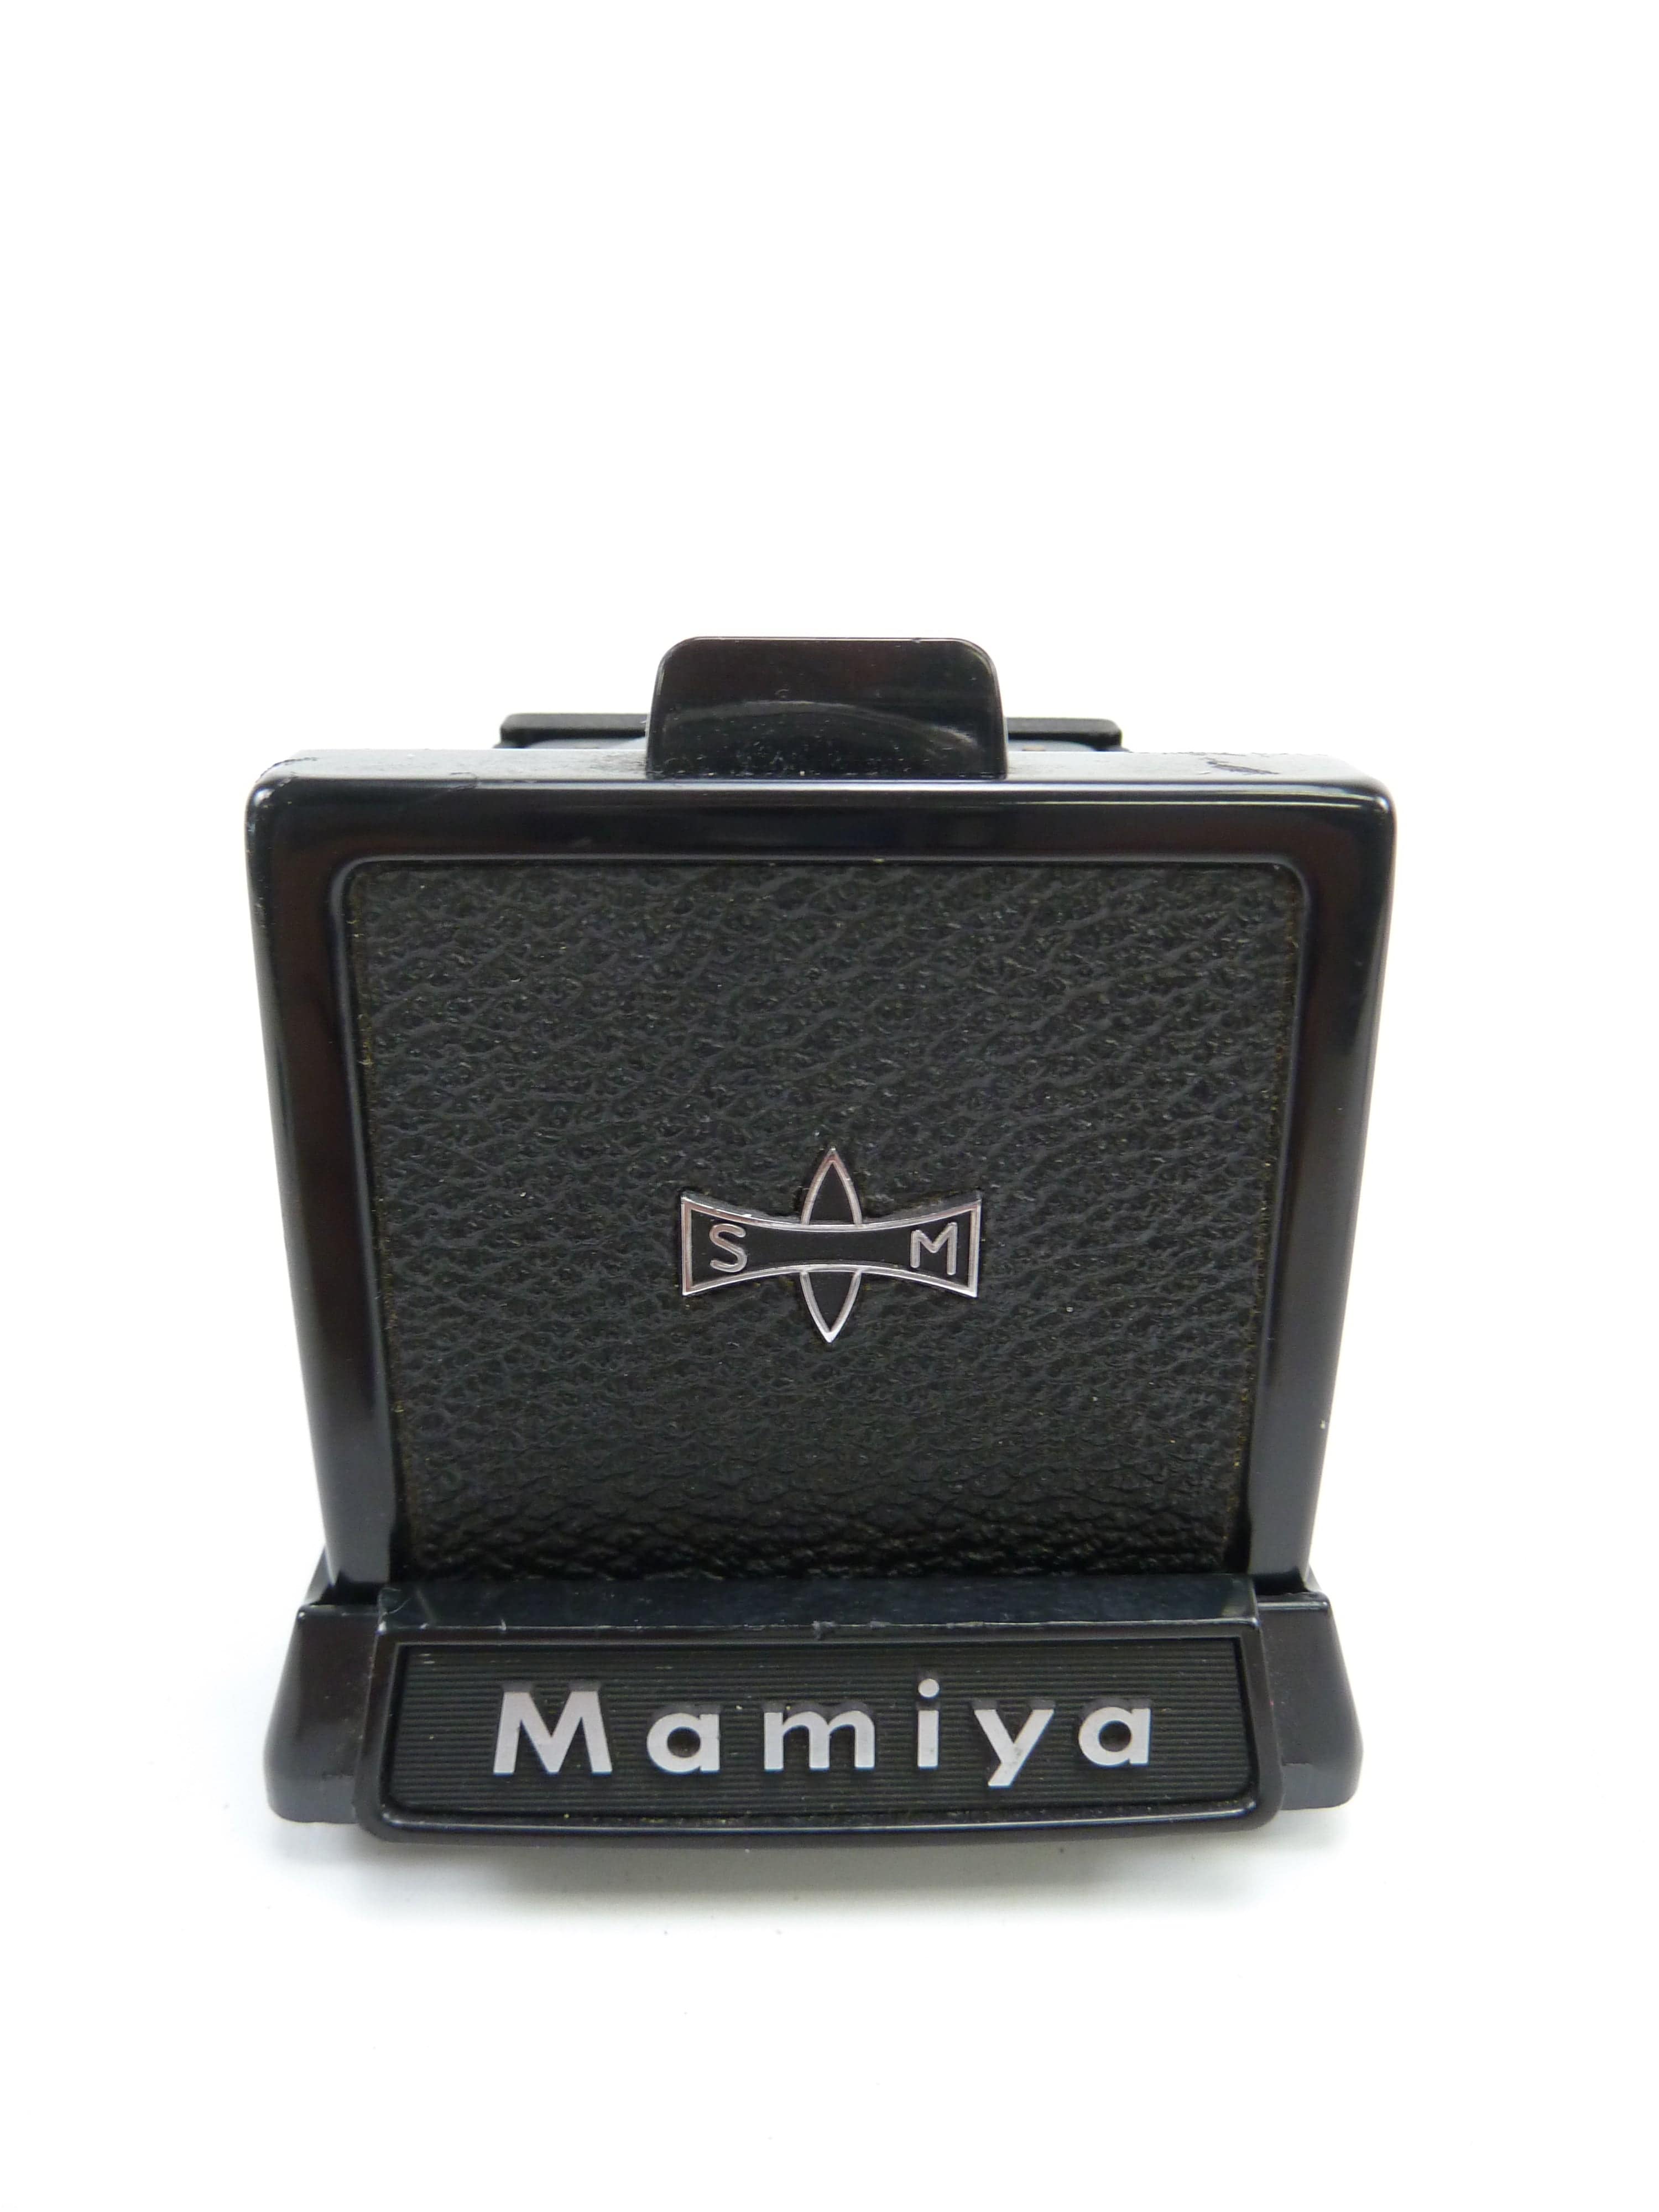 Mamiya M645 Waist Level Finder with sports mask